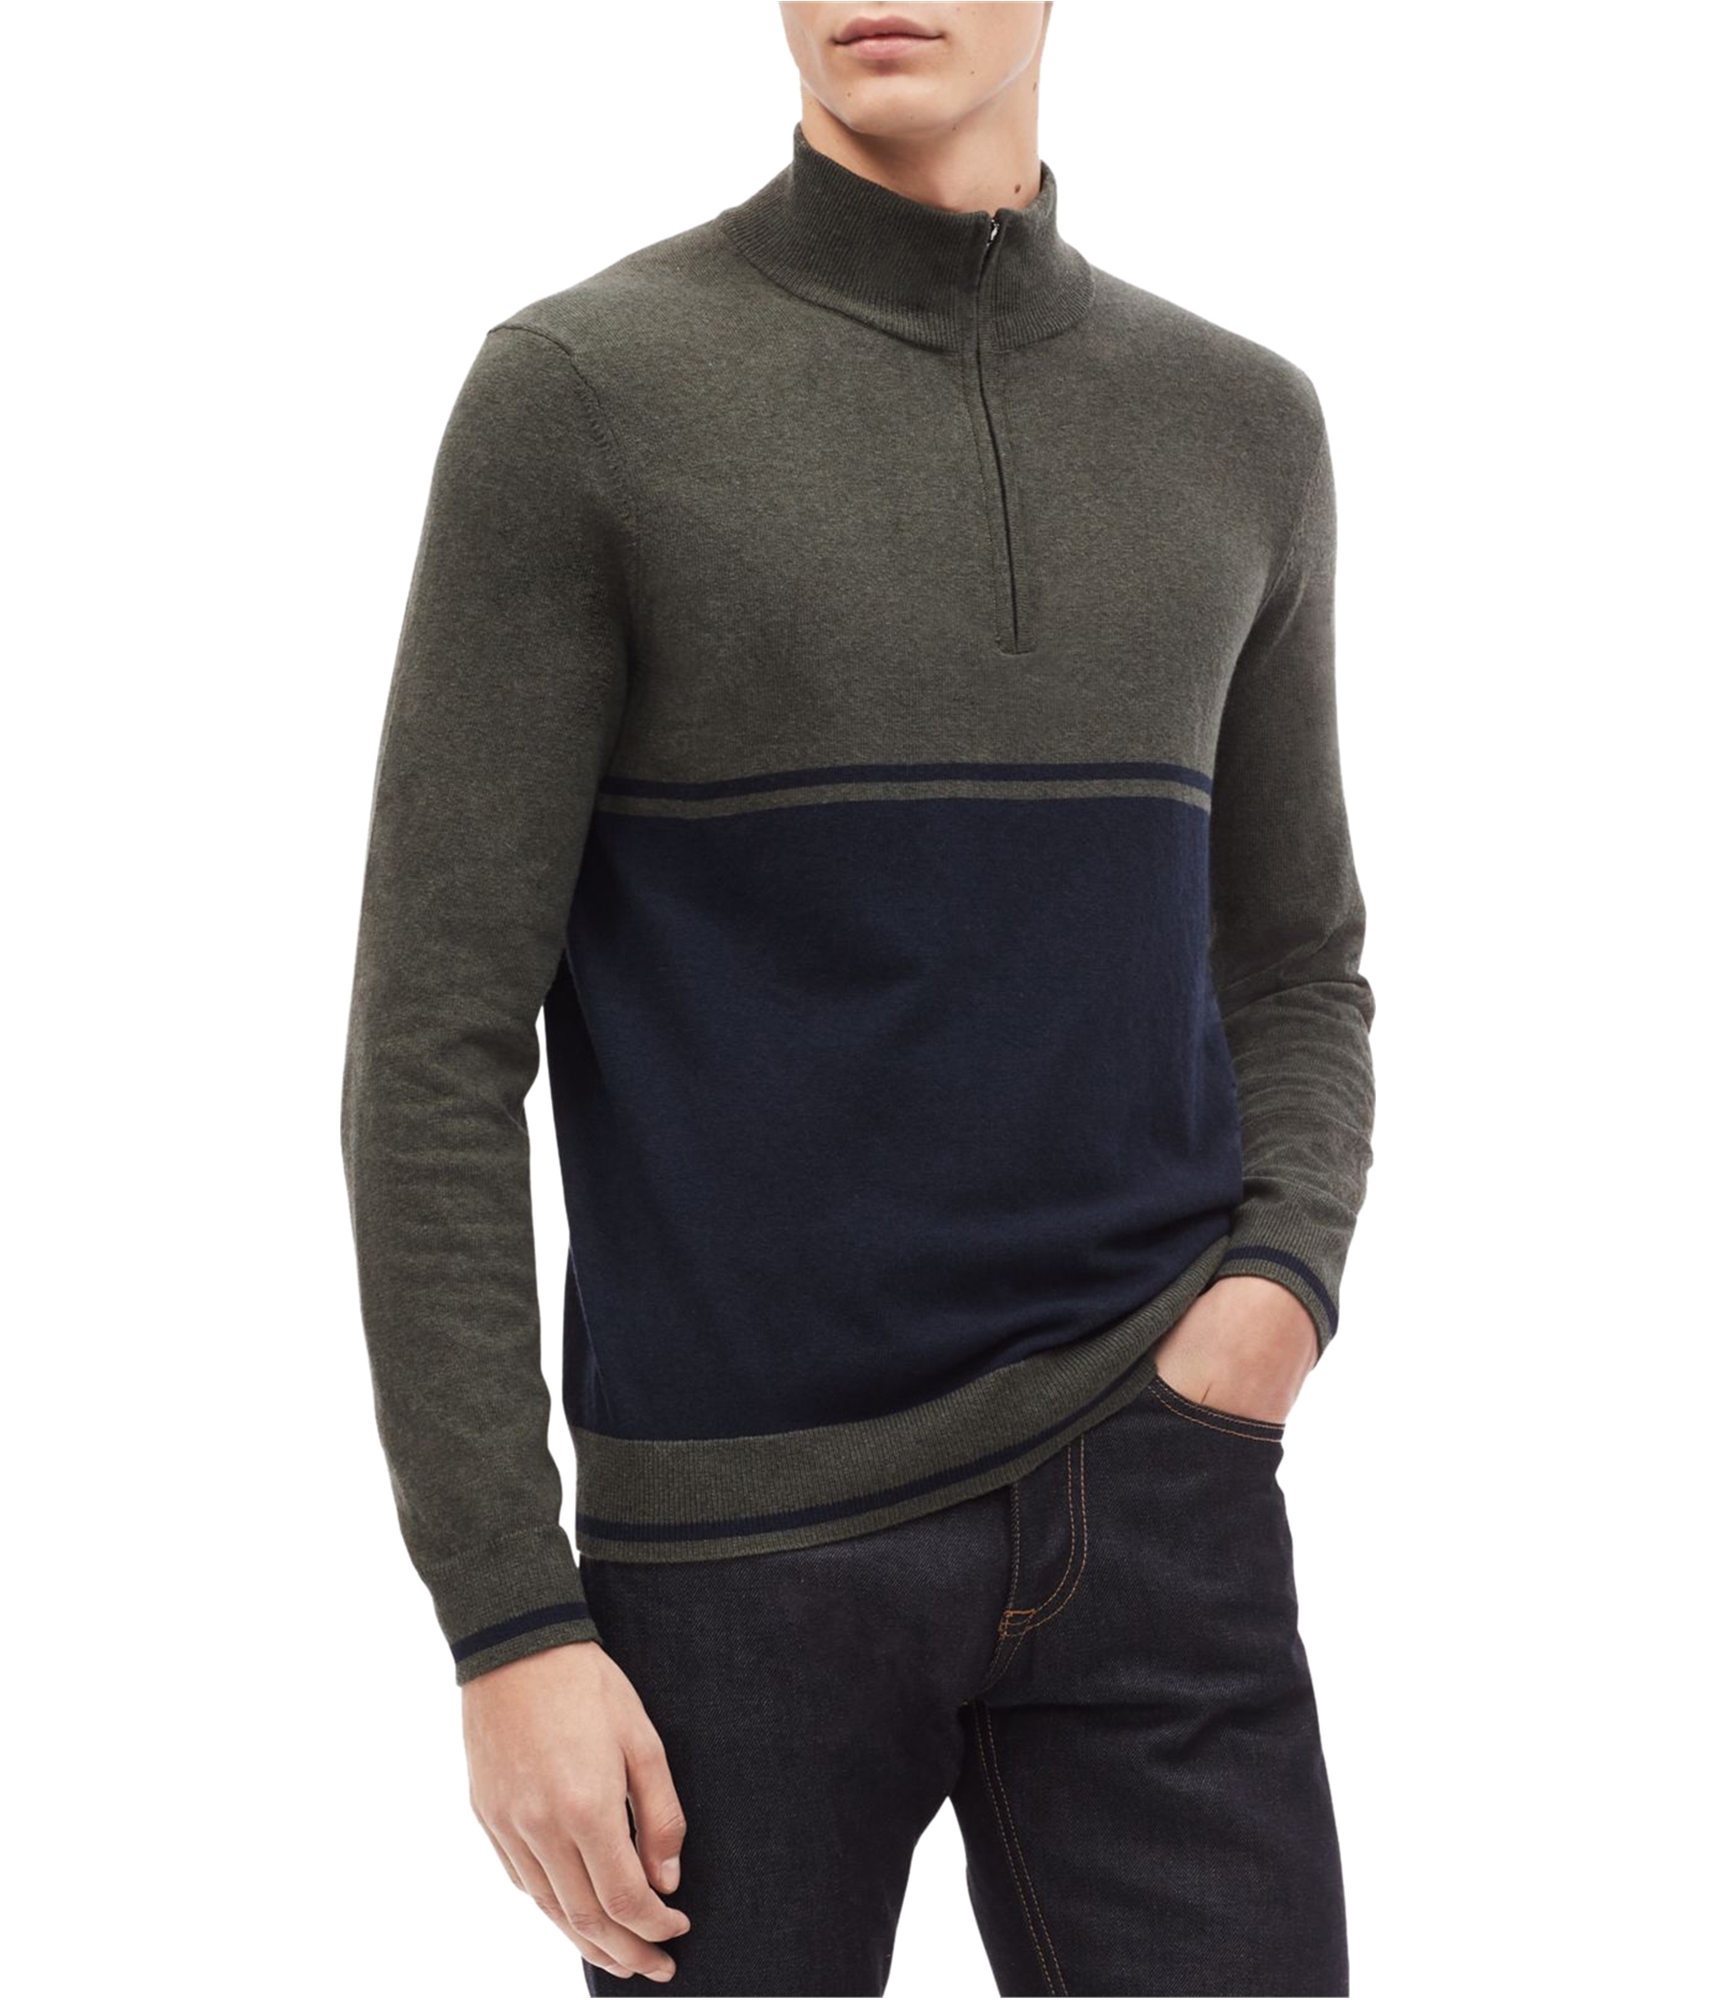 Kreet eindeloos Rang Buy a Mens Calvin Klein Colorblocked Quarter Zip Pullover Sweater Online |  TagsWeekly.com